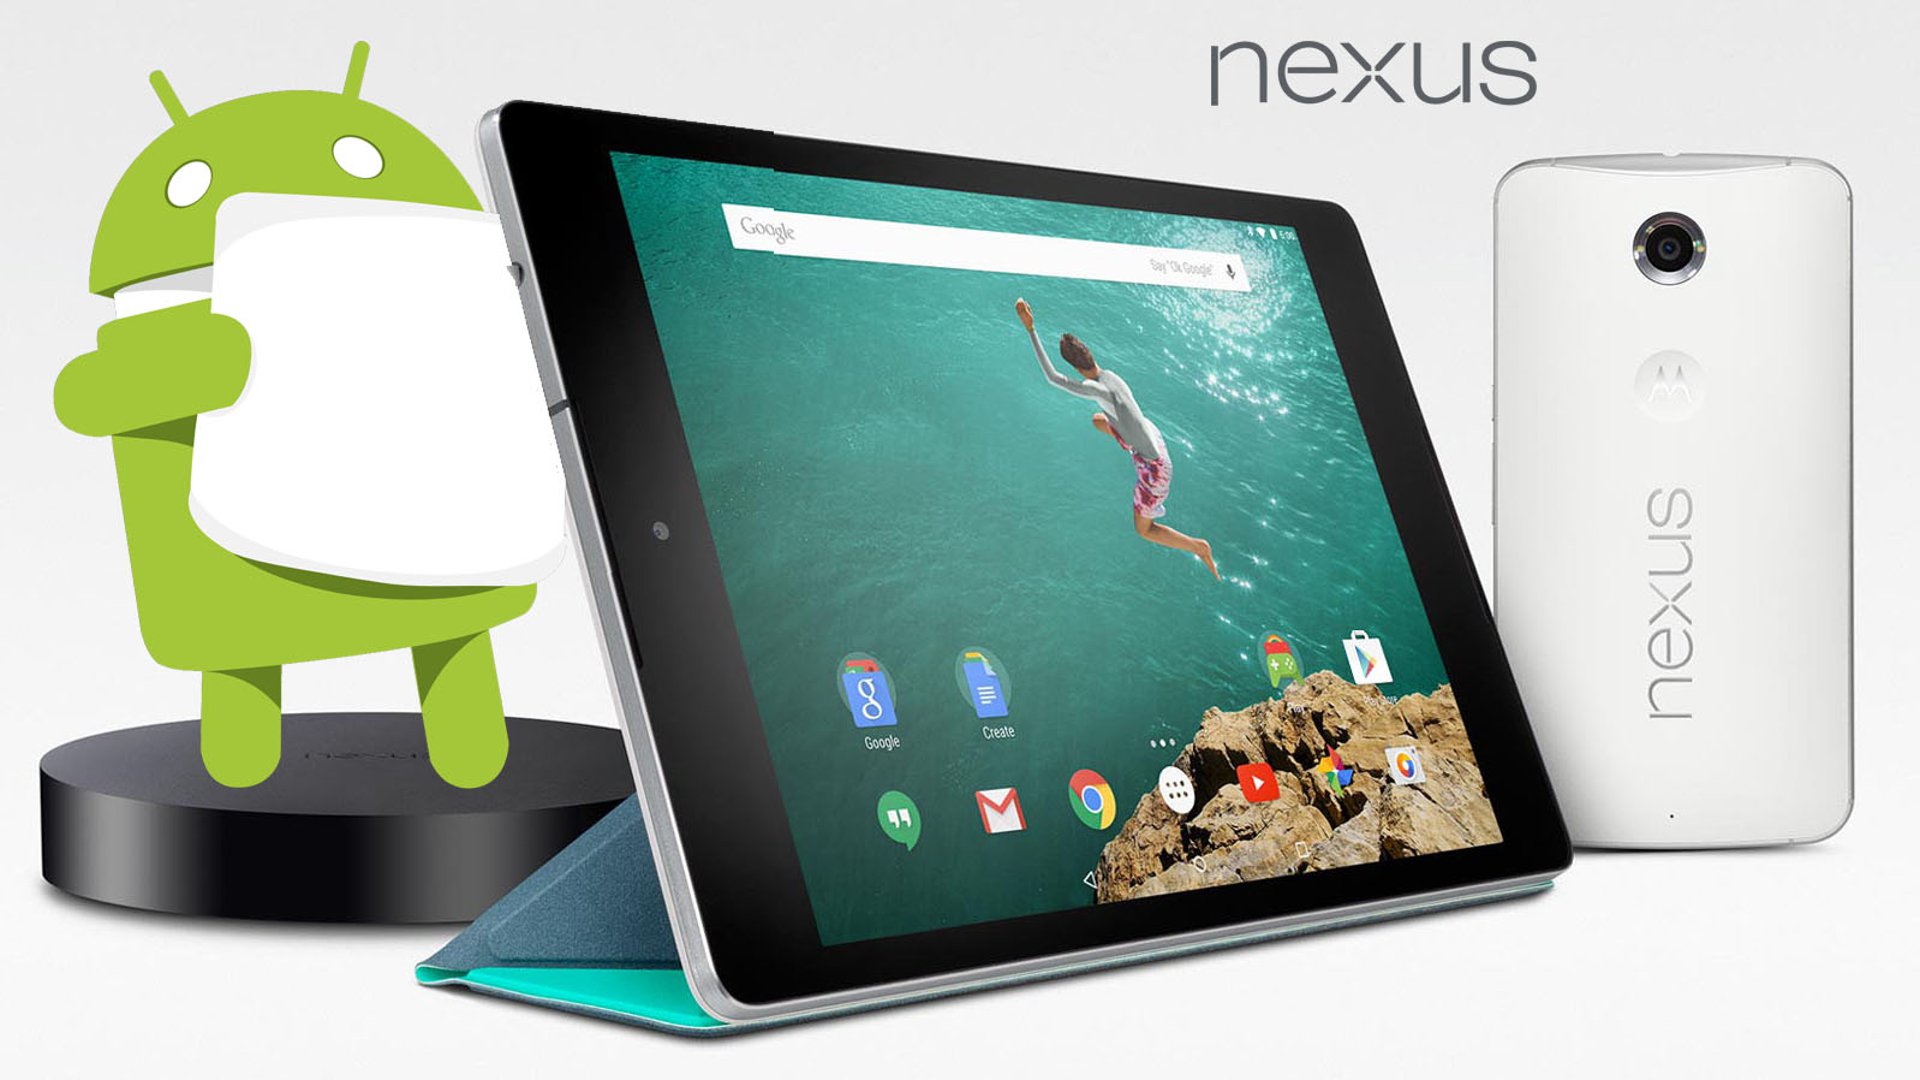 Android 6.0 OTA Updates For Google Nexus Devices